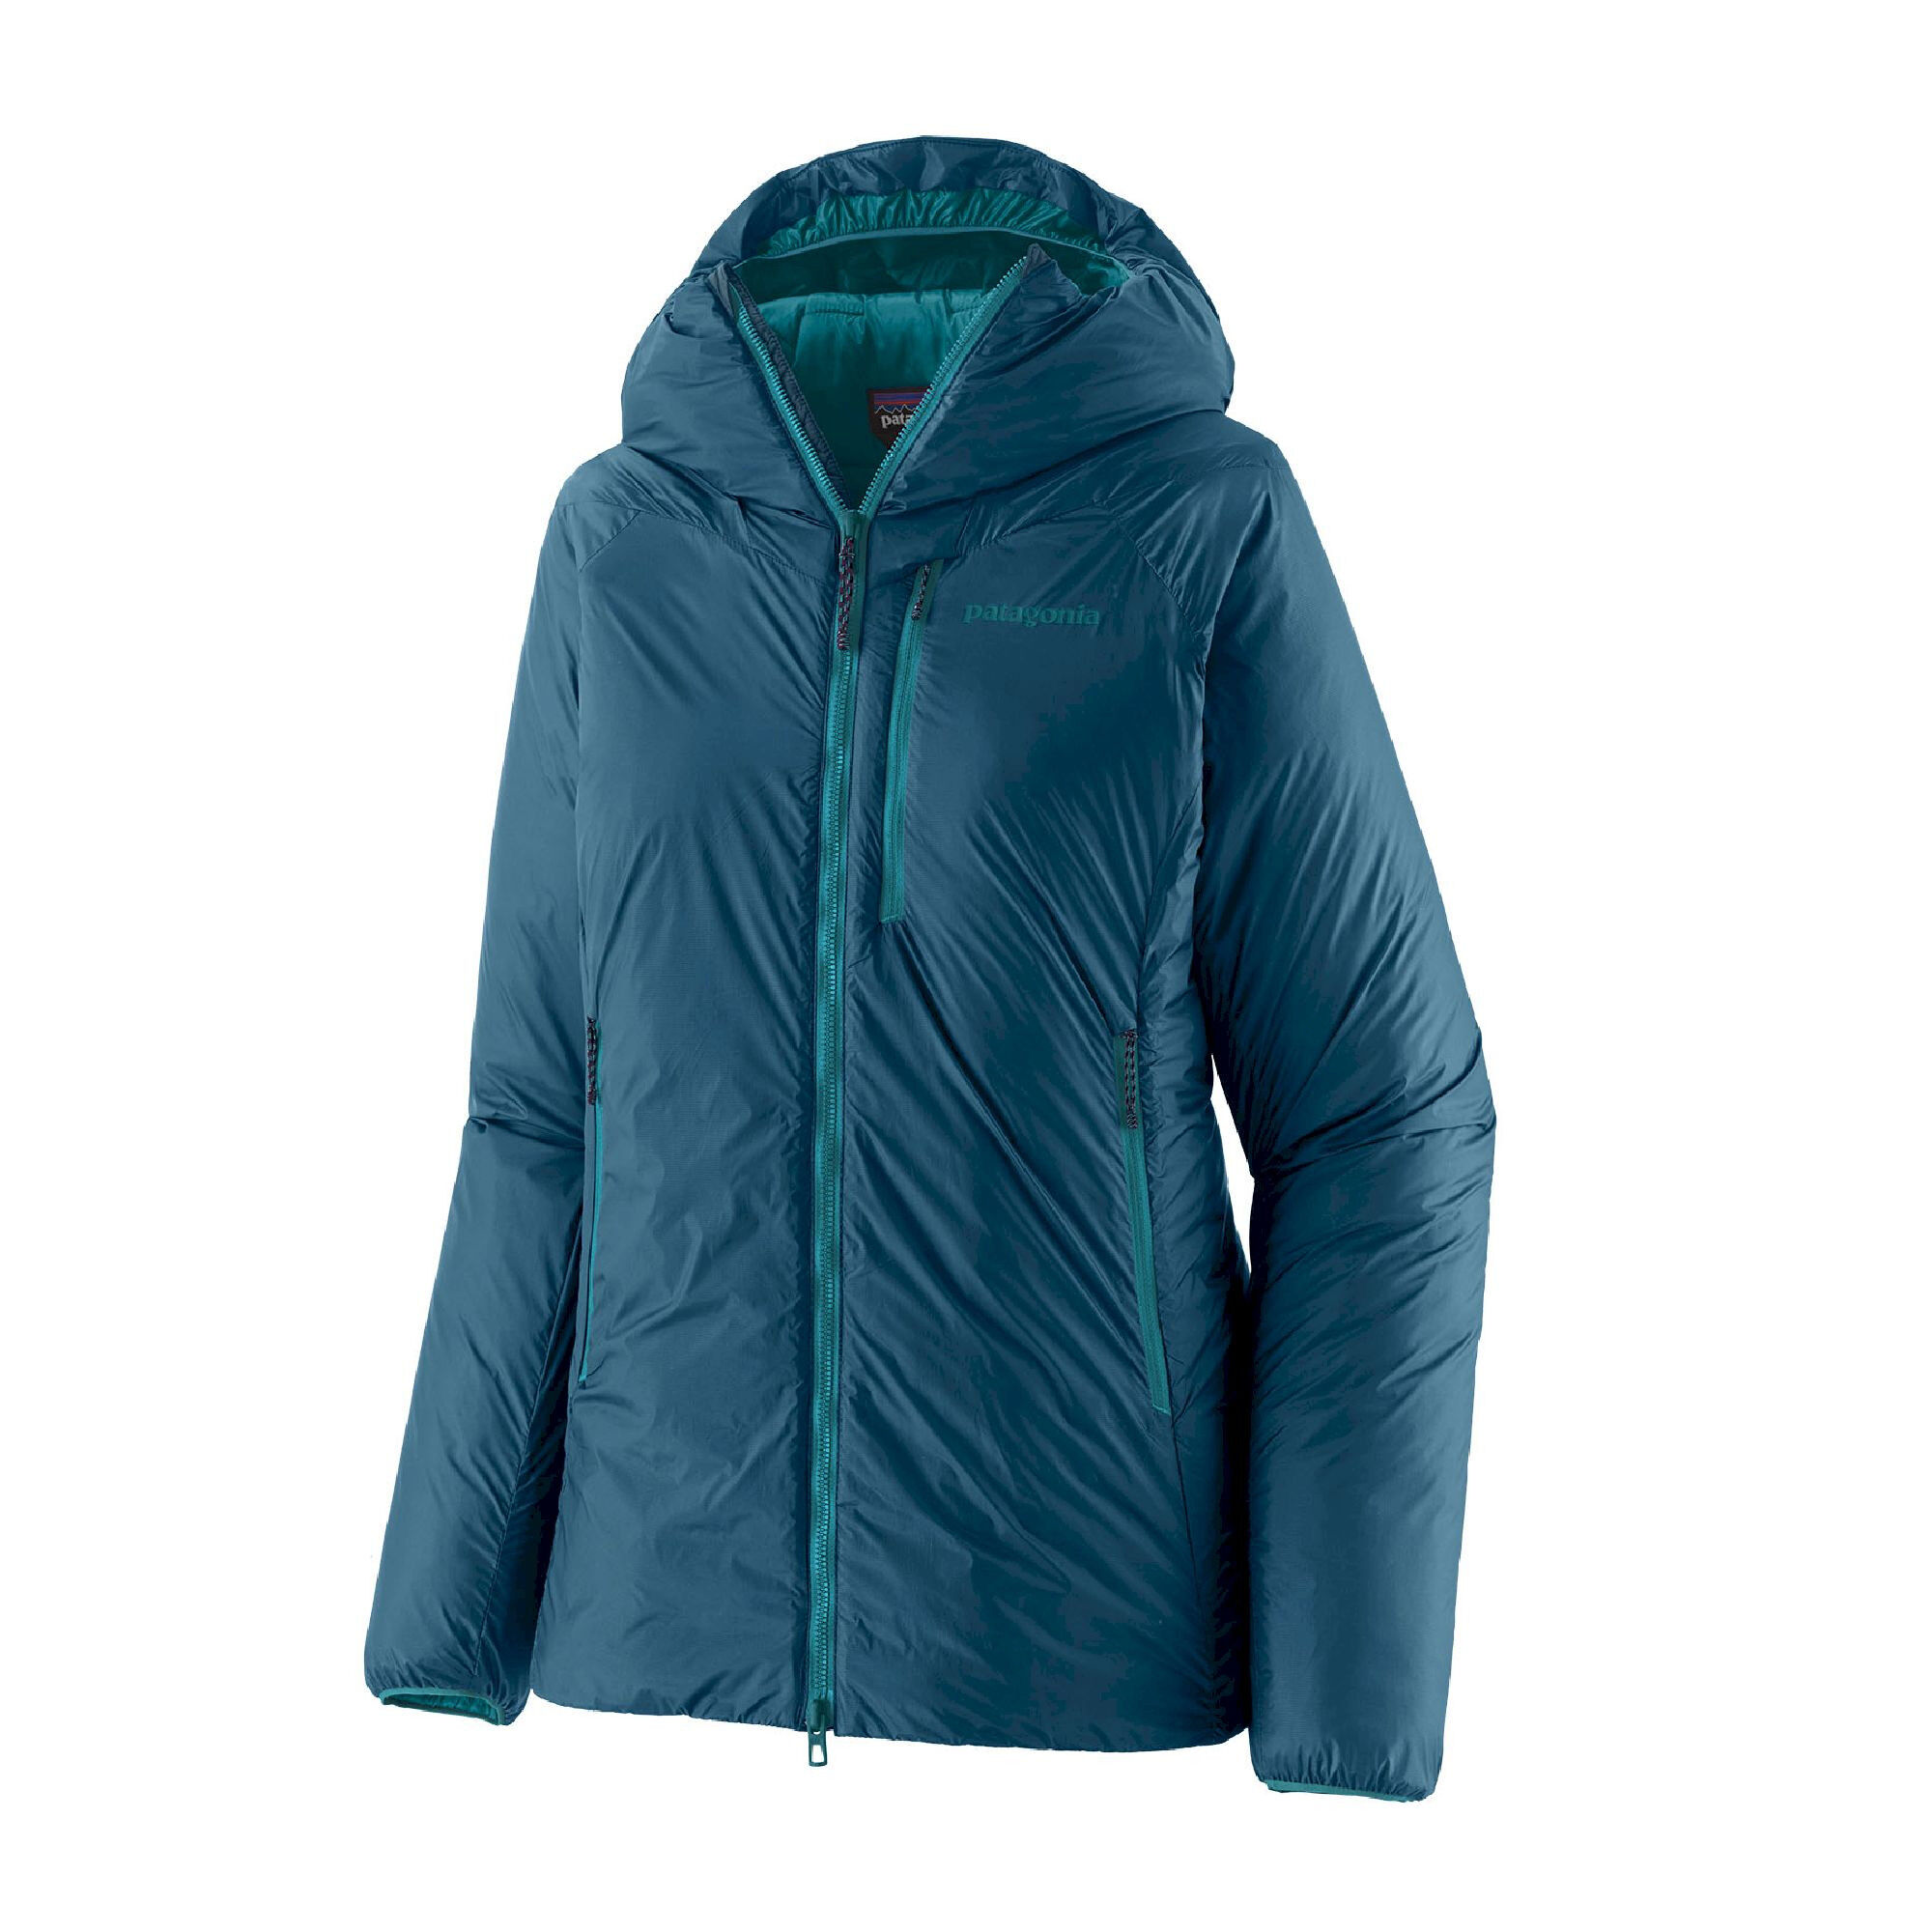 Patagonia DAS Light Hoody - Synthetic jacket - Women's